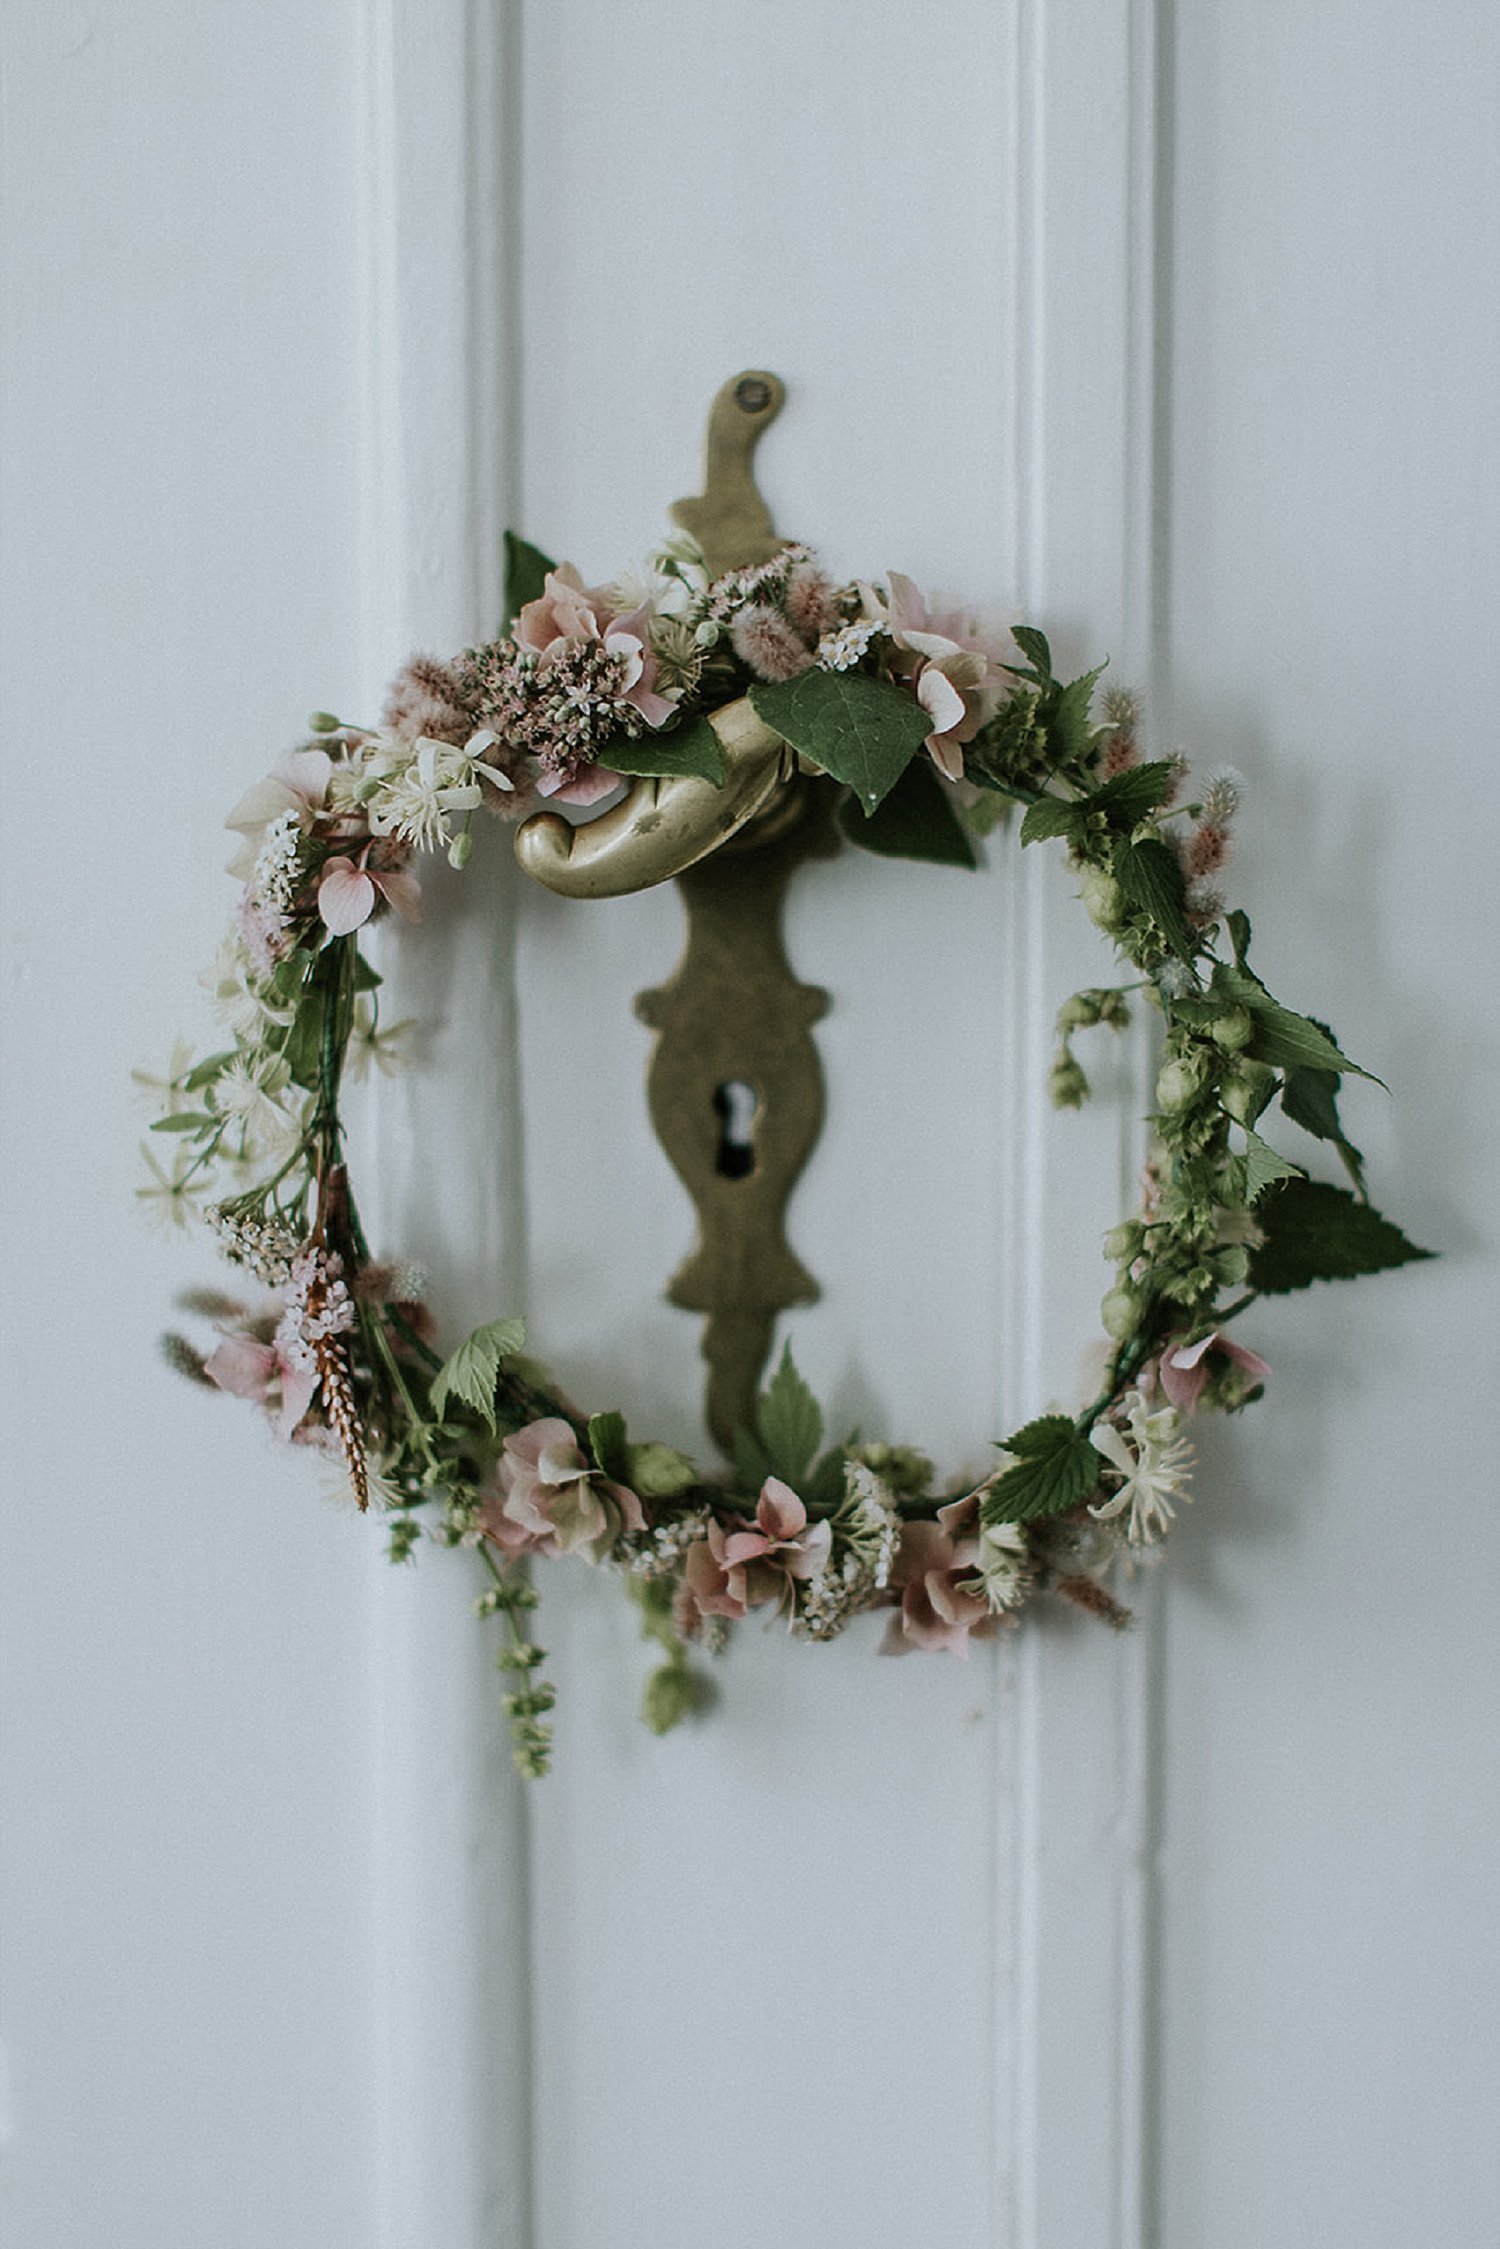 floral ring on doorknob | Aero Island | Danish Island Weddings | Full service Denmark wedding planners